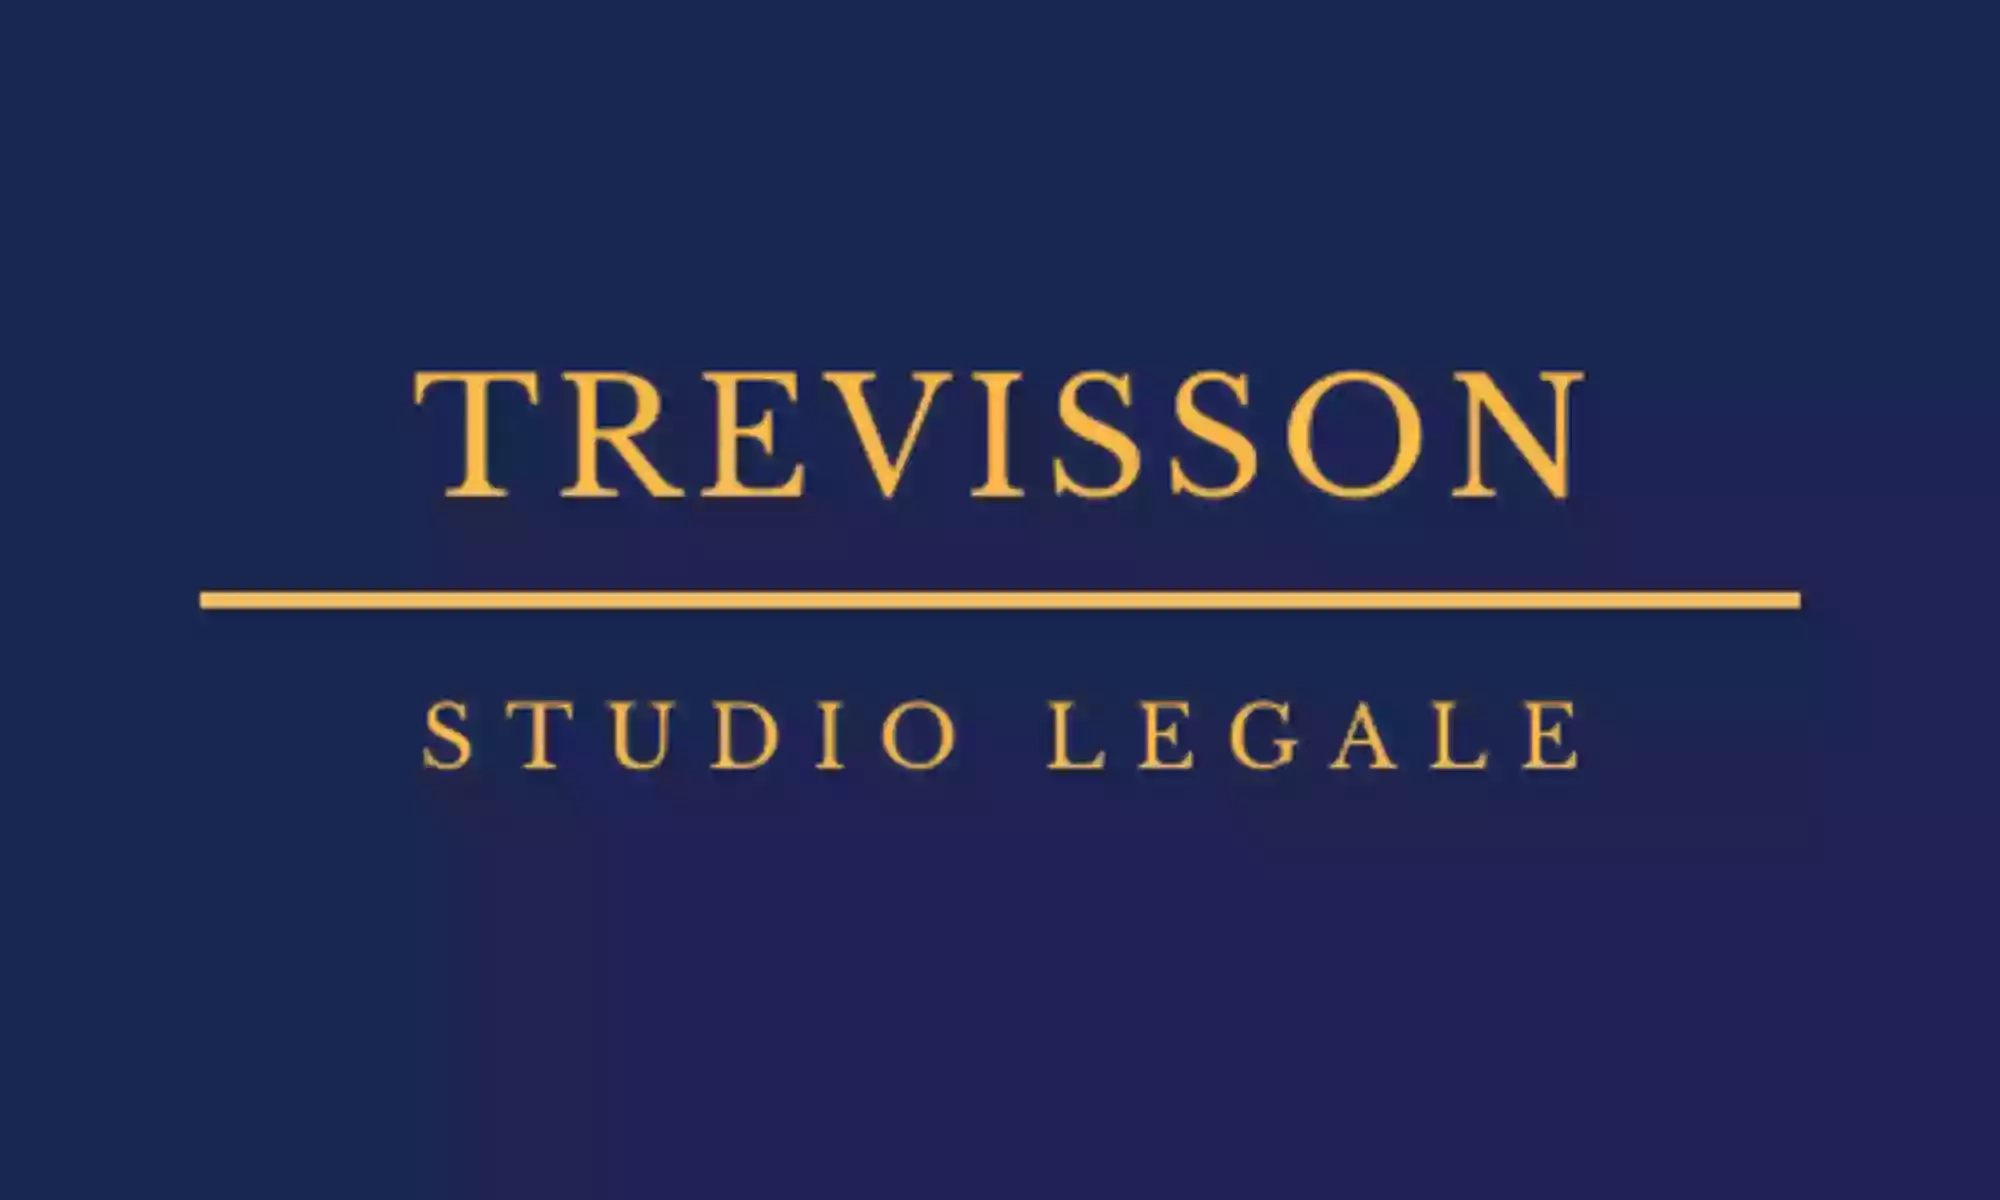 Studio Legale Trevisson